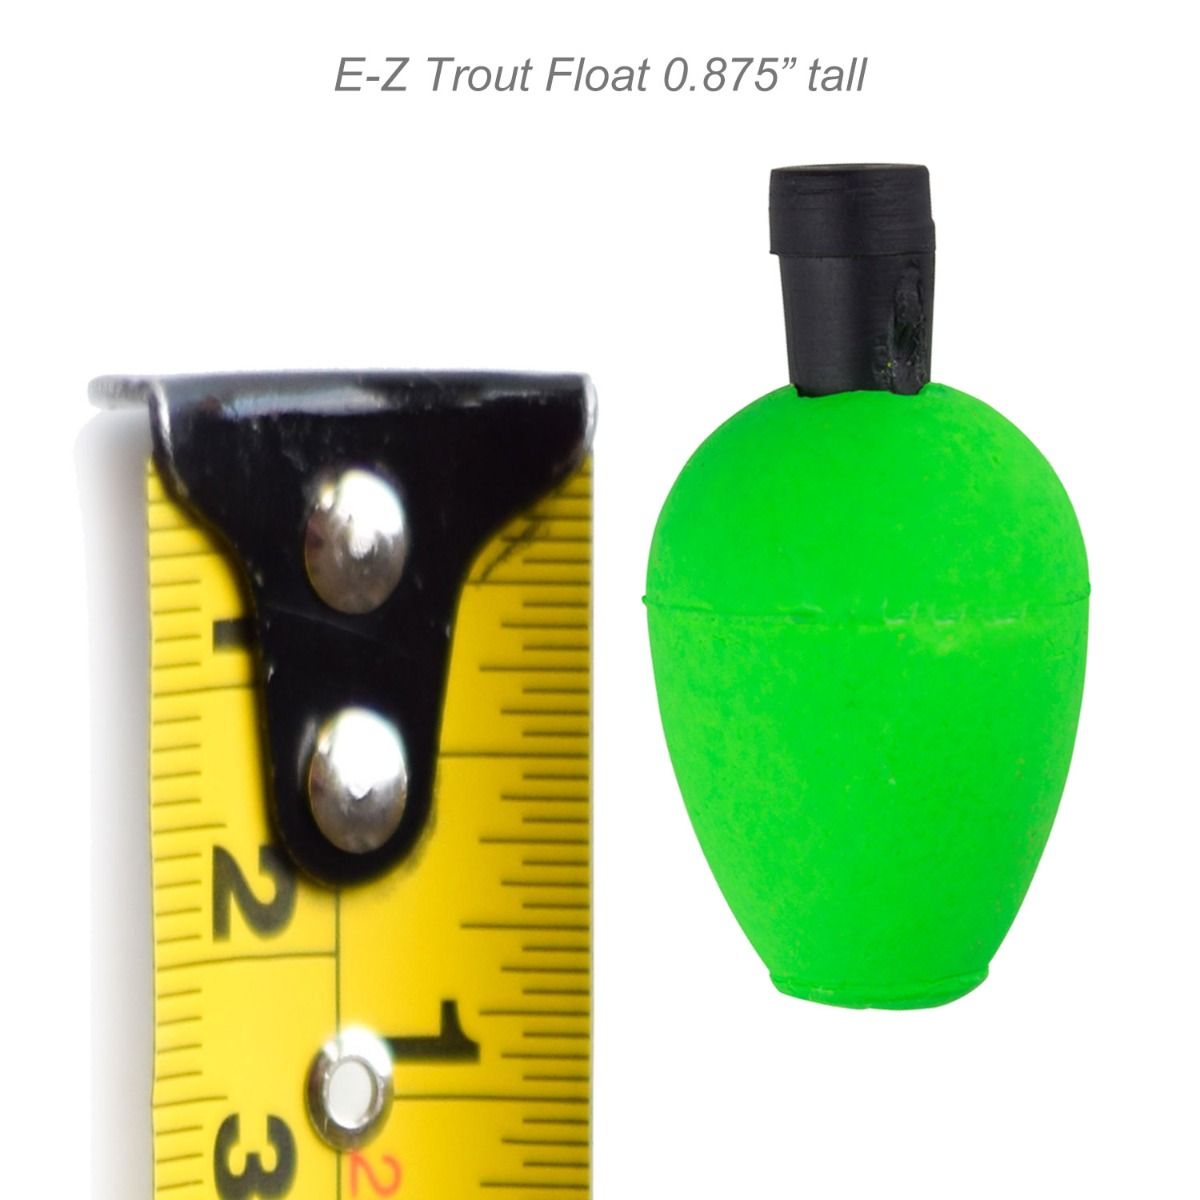 Nicklow's Wholesale Tackle > Bobbers & Floats > Wholesale Leland Lures E-Z  Trout Magnet Floats